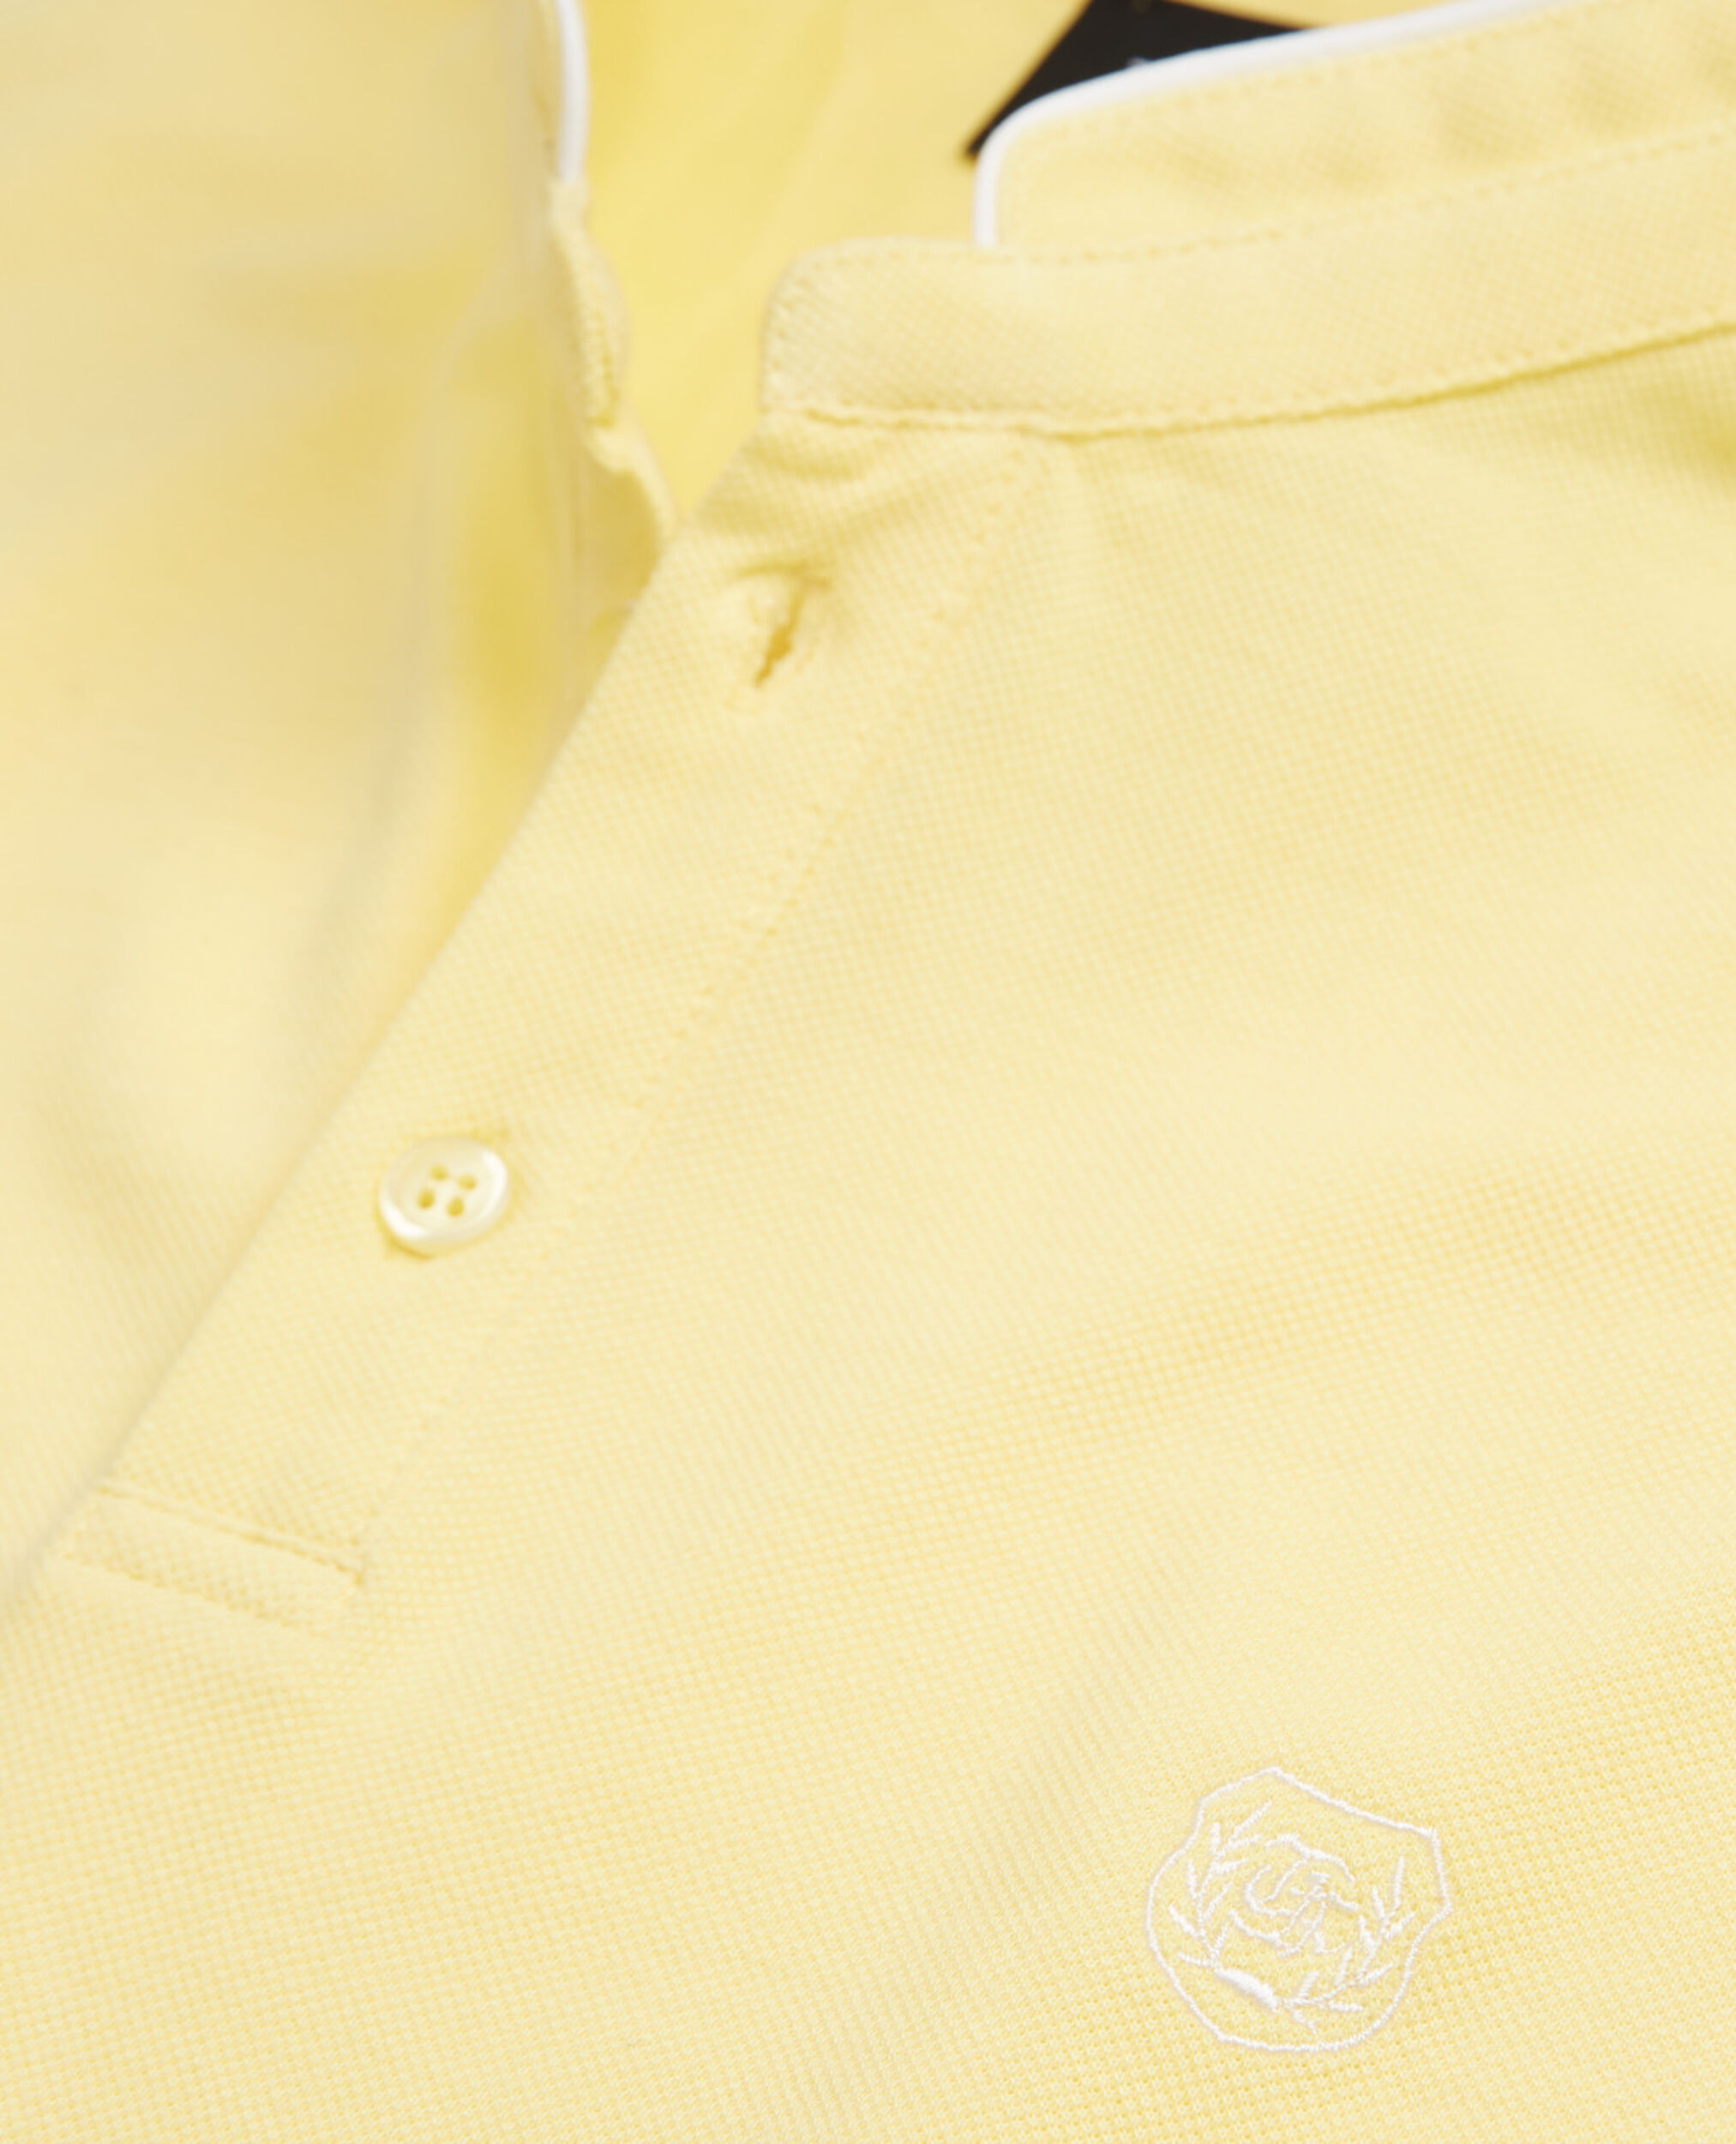 Camisa polo amarilla algodón Mao bordado, VERY LT YELLOW/BLANC, hi-res image number null